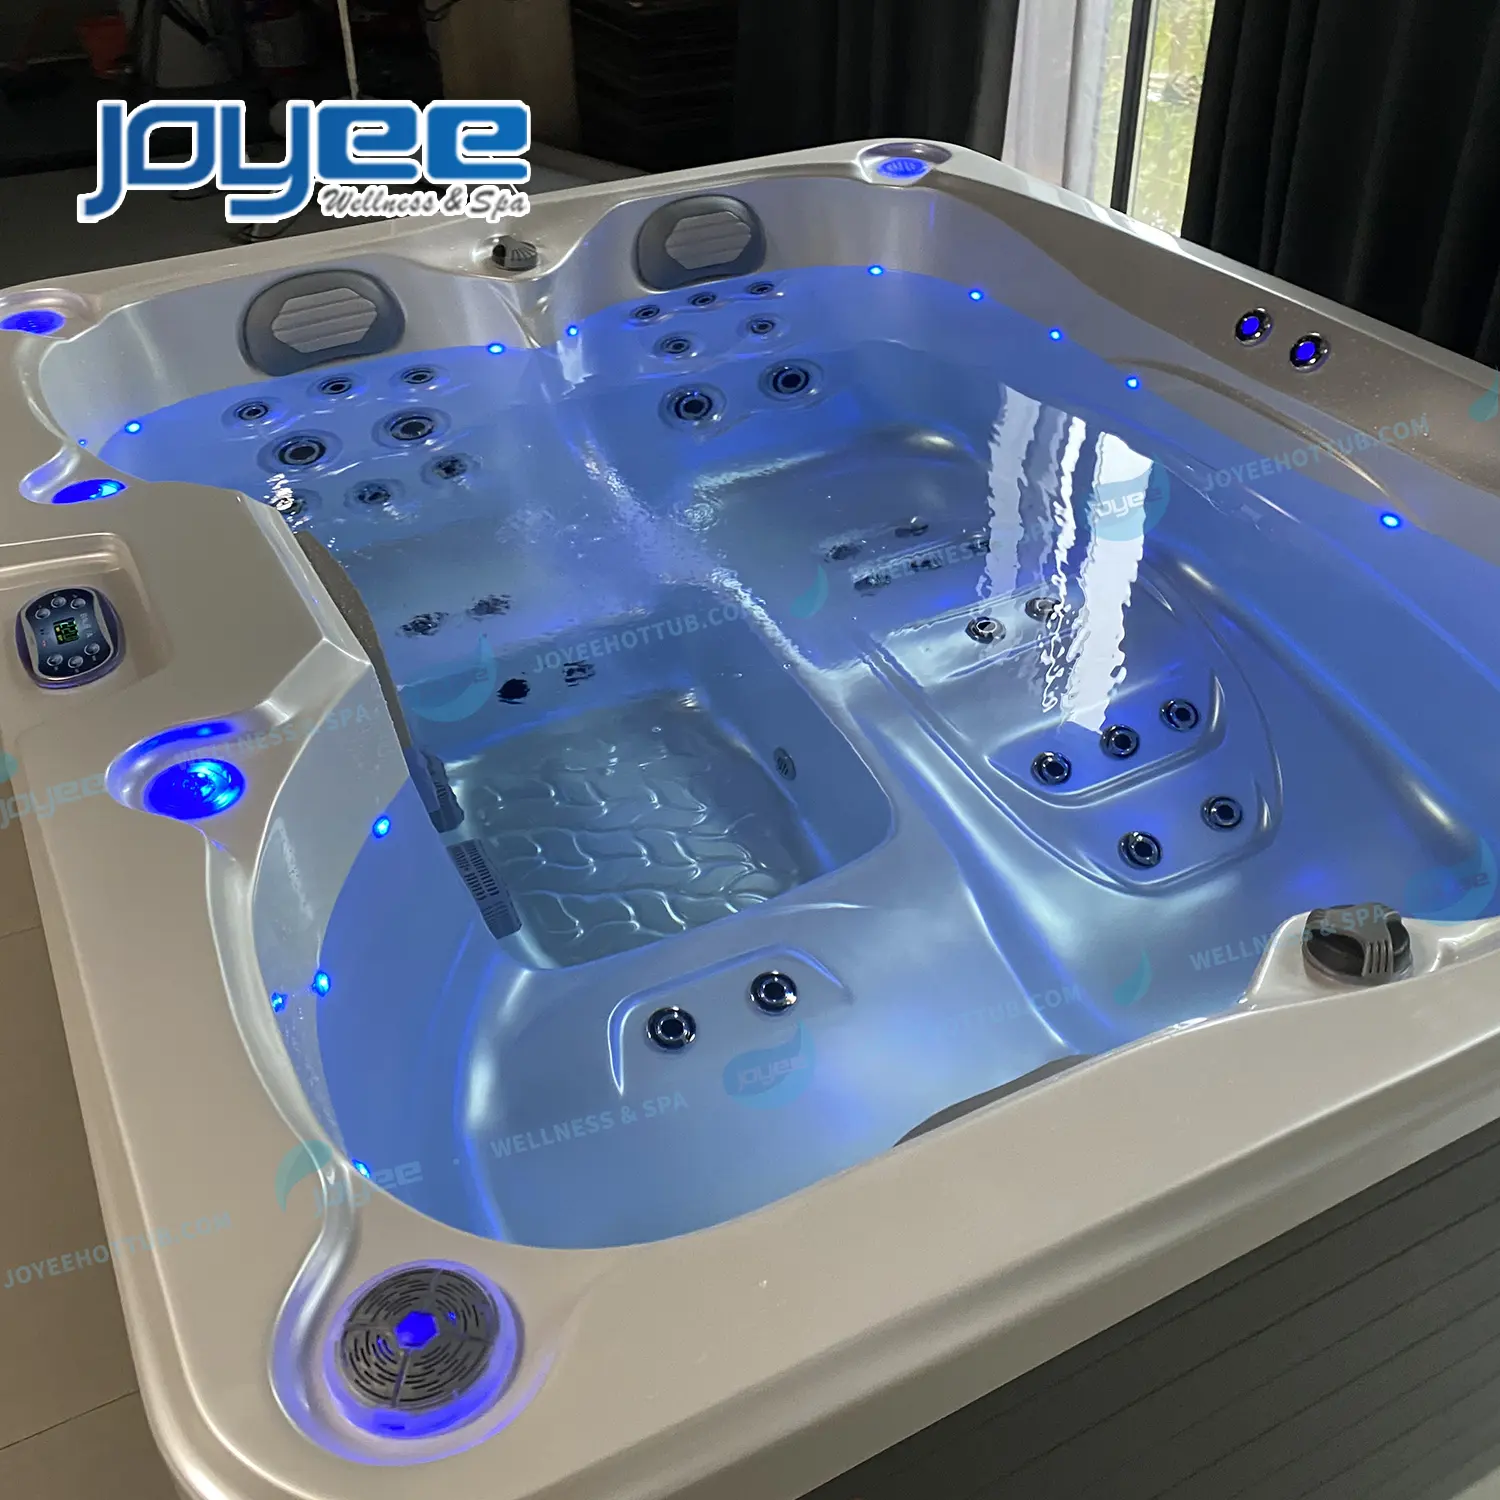 JOYEE 2023 New model 4 persons mini whirlpool balboa acrylic hot tub outdoor small pools with music speaker